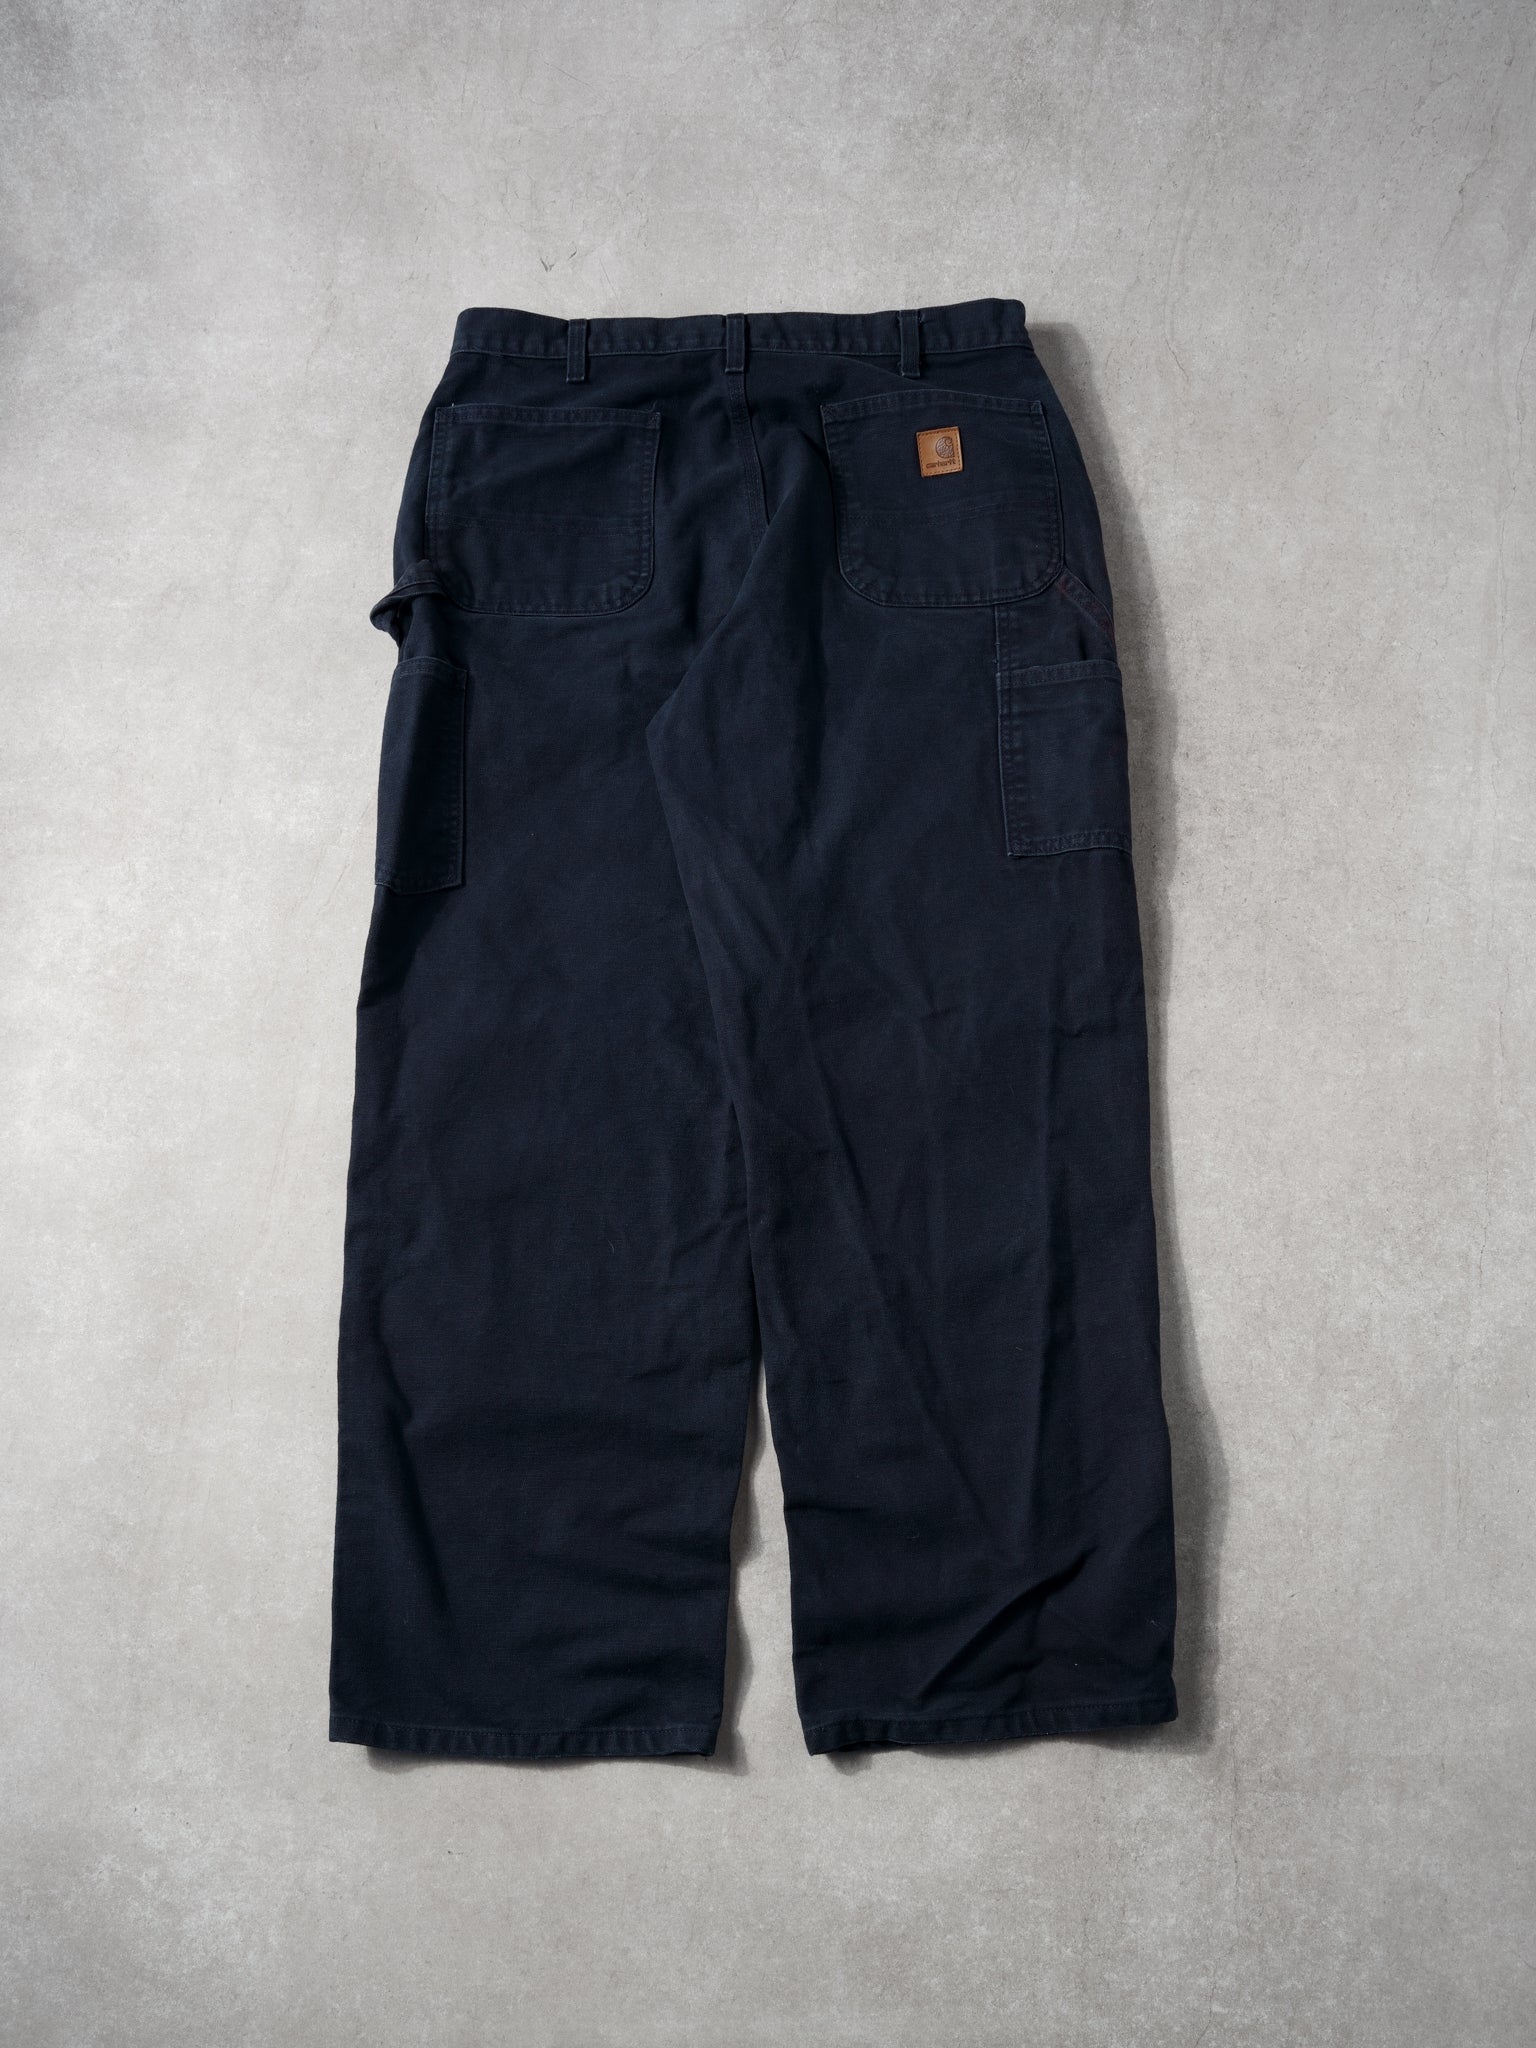 Vintage 90s Dark Navy Blue Carhartt Capenter Pants (36x30)